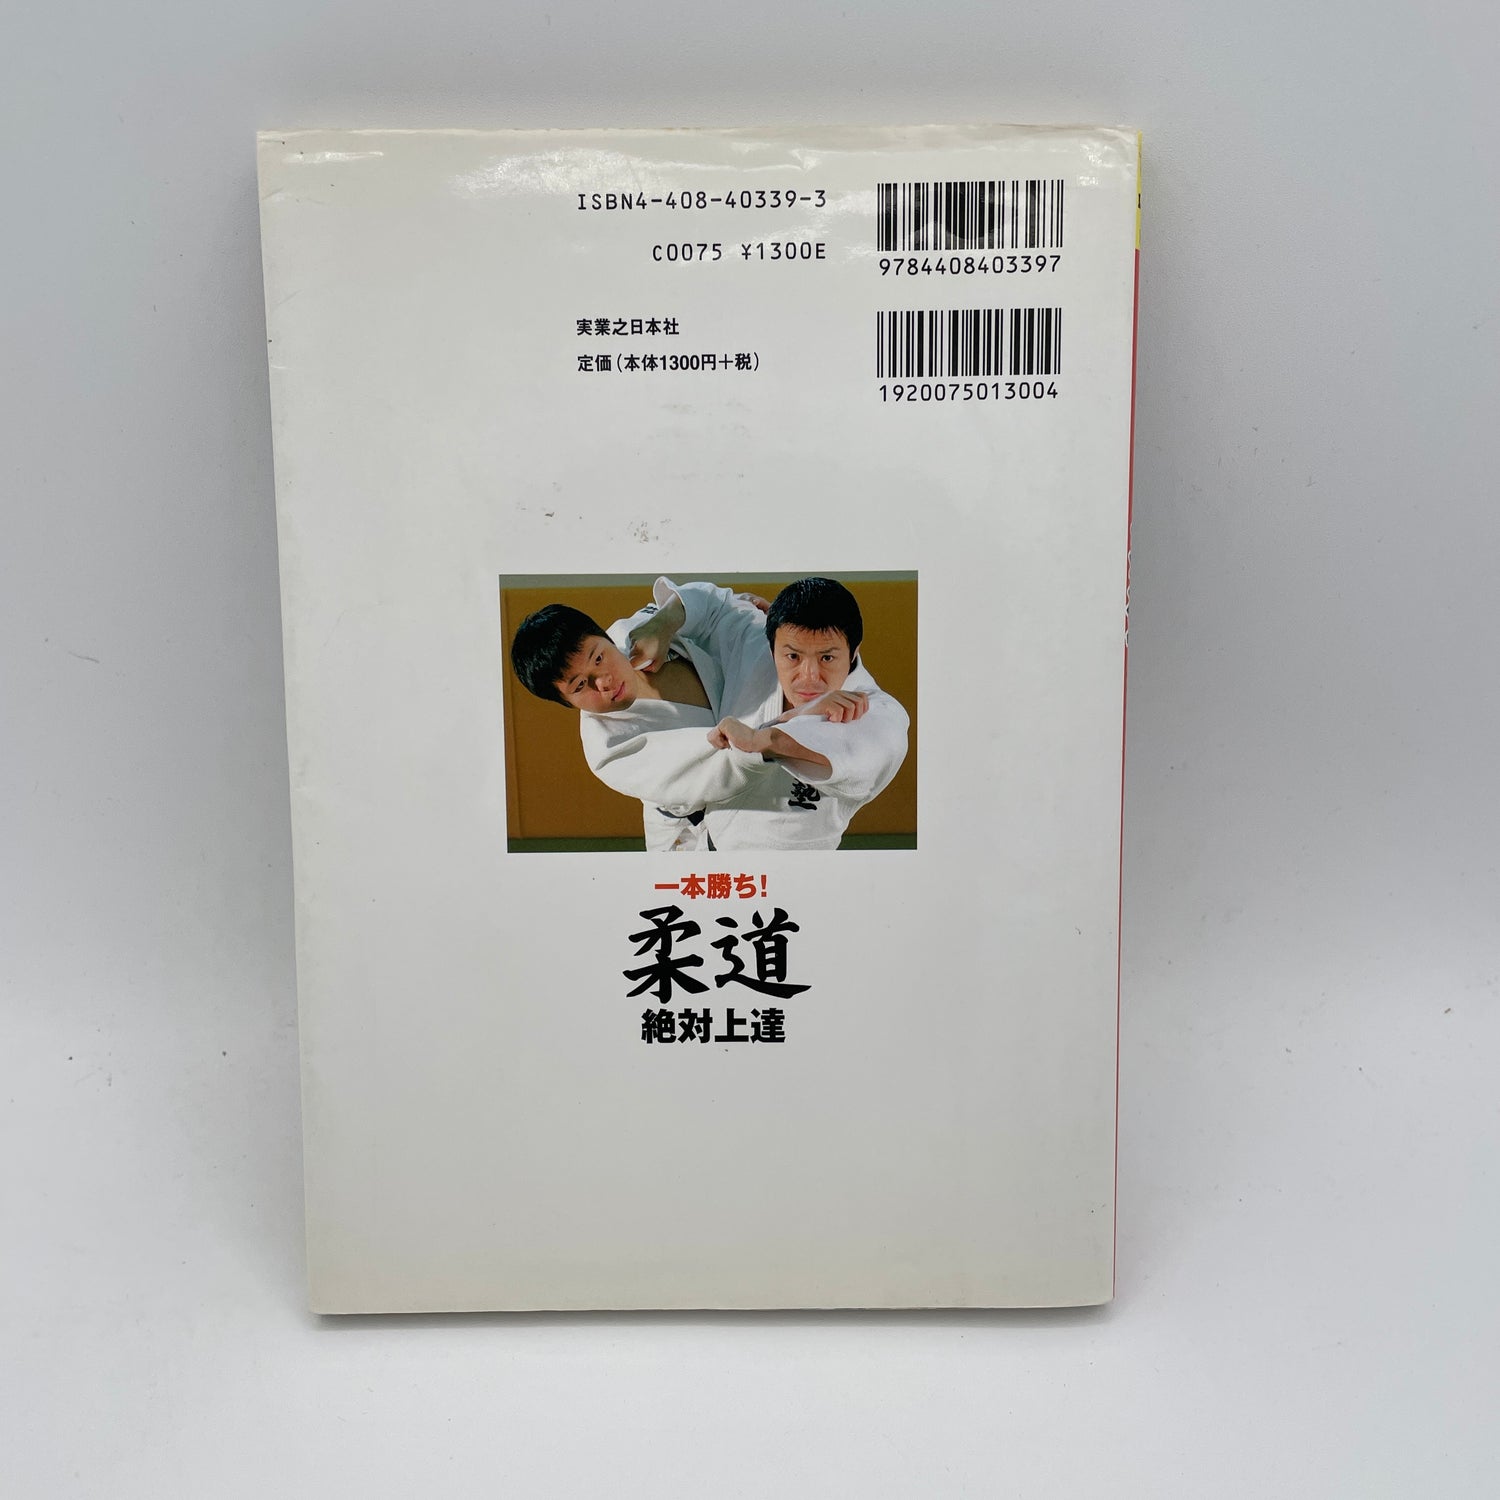 Libro de mejora absoluta del judo de Toshihiko Koga (usado) 